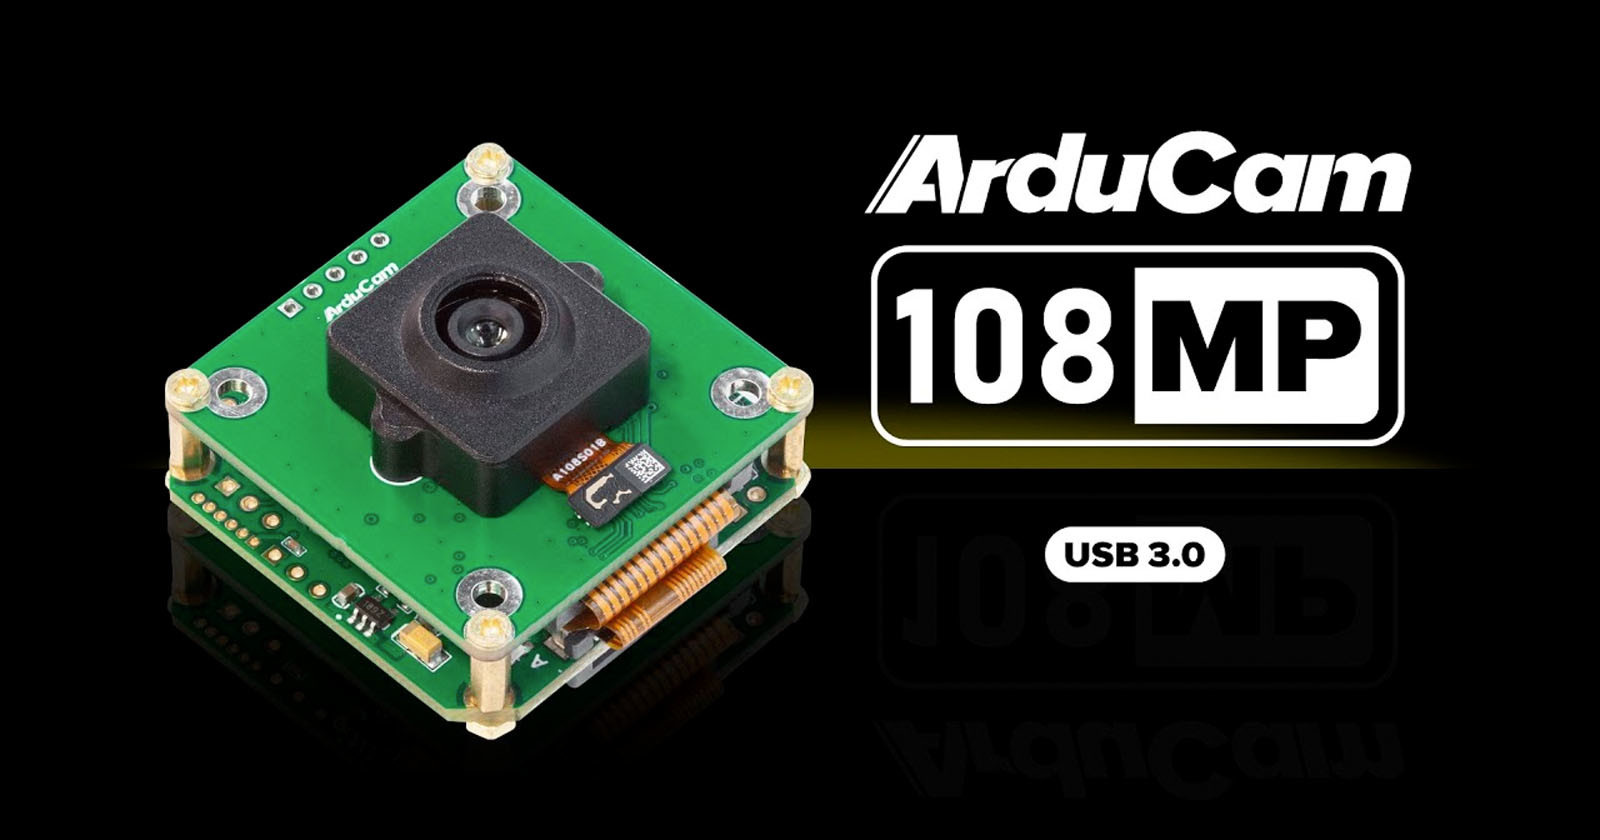  arducam 108mp usb camera brings huge resolution low 